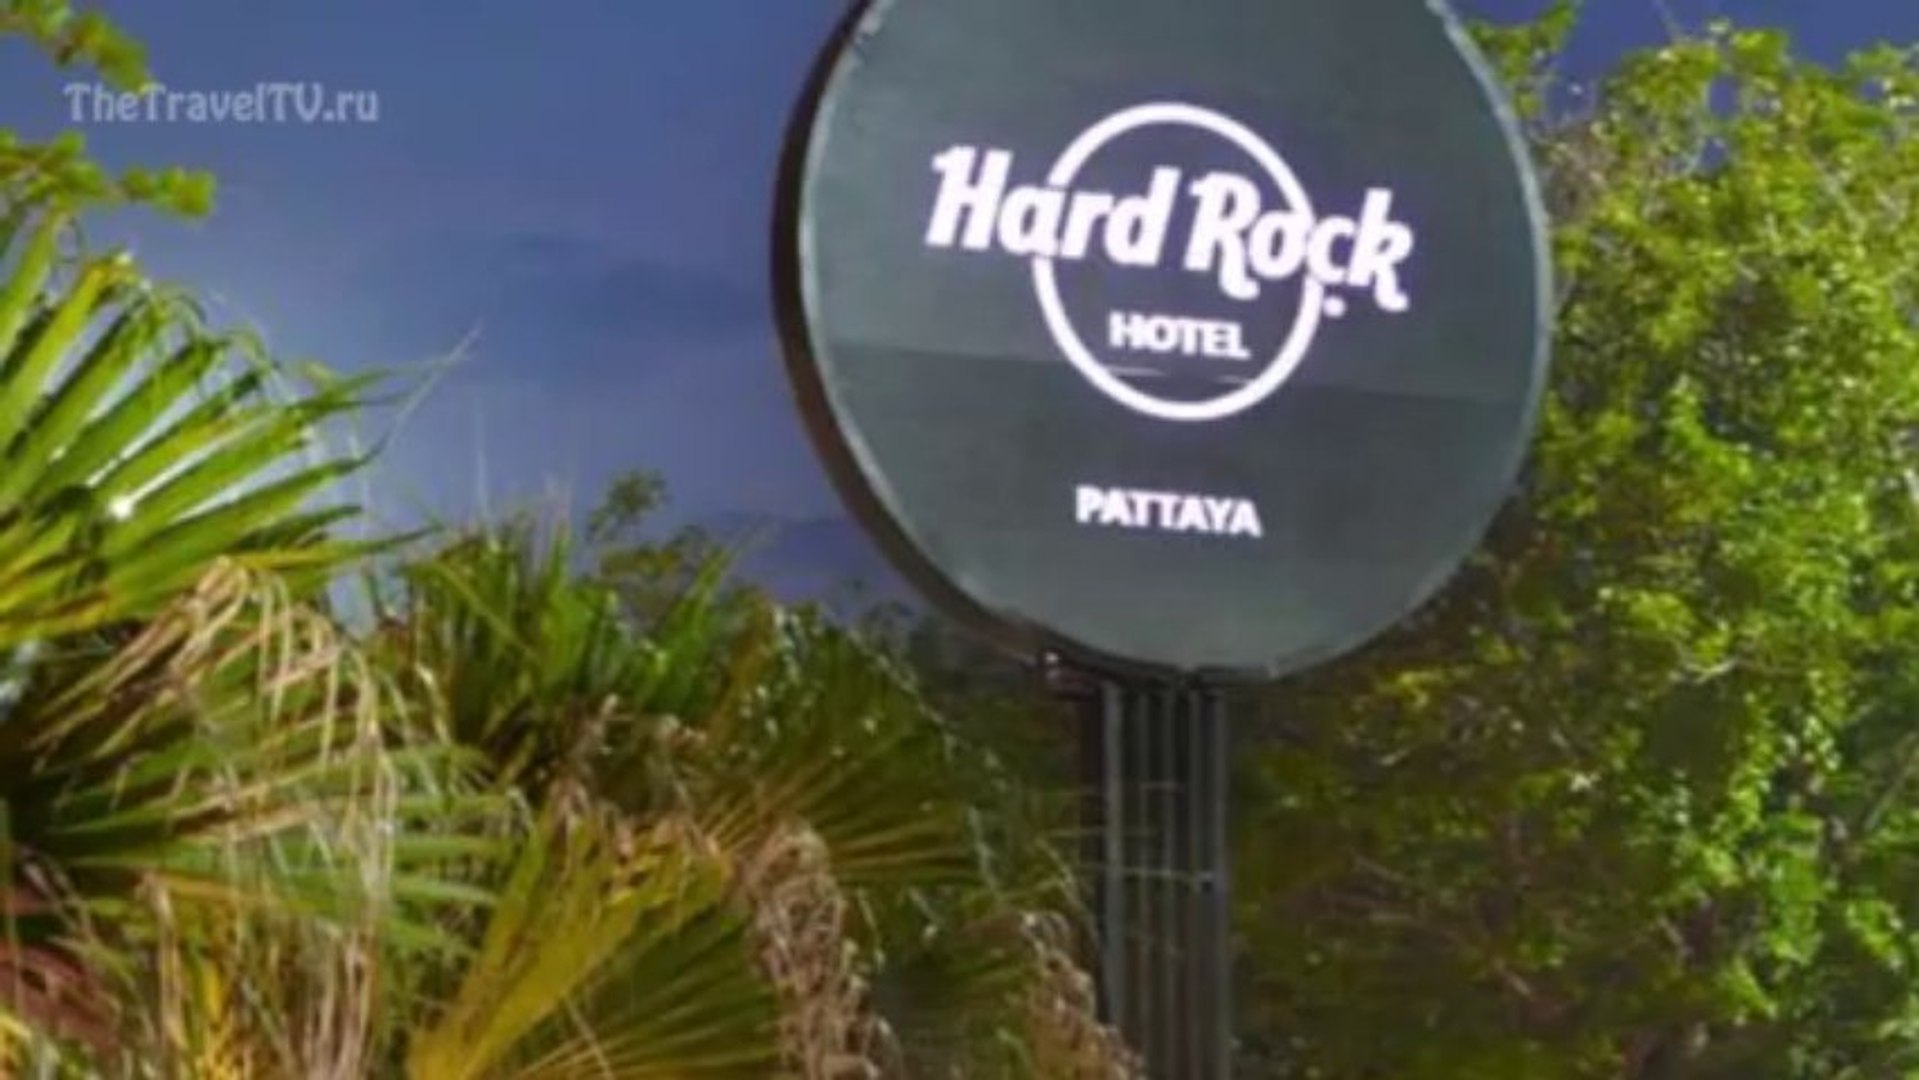 Hard Rock Hotel. Pattaya. Отели Паттайи